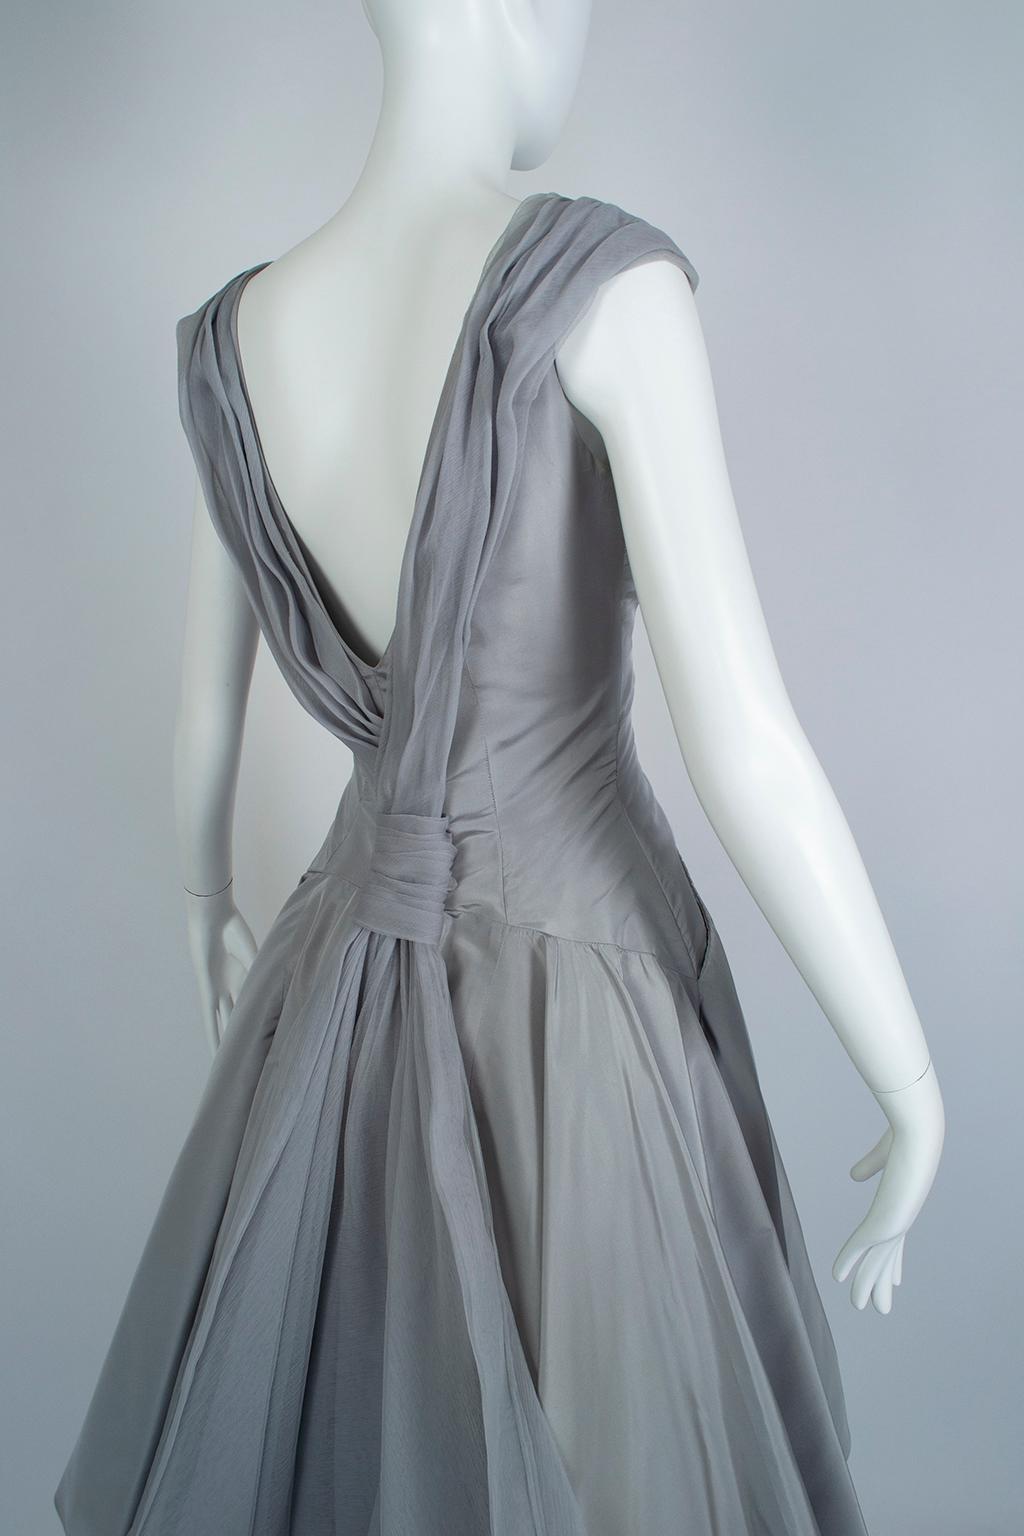 Werlé Beverly Hills Dove Gray Bib-Front Ballerina Dress - Medium, 1950s For Sale 2